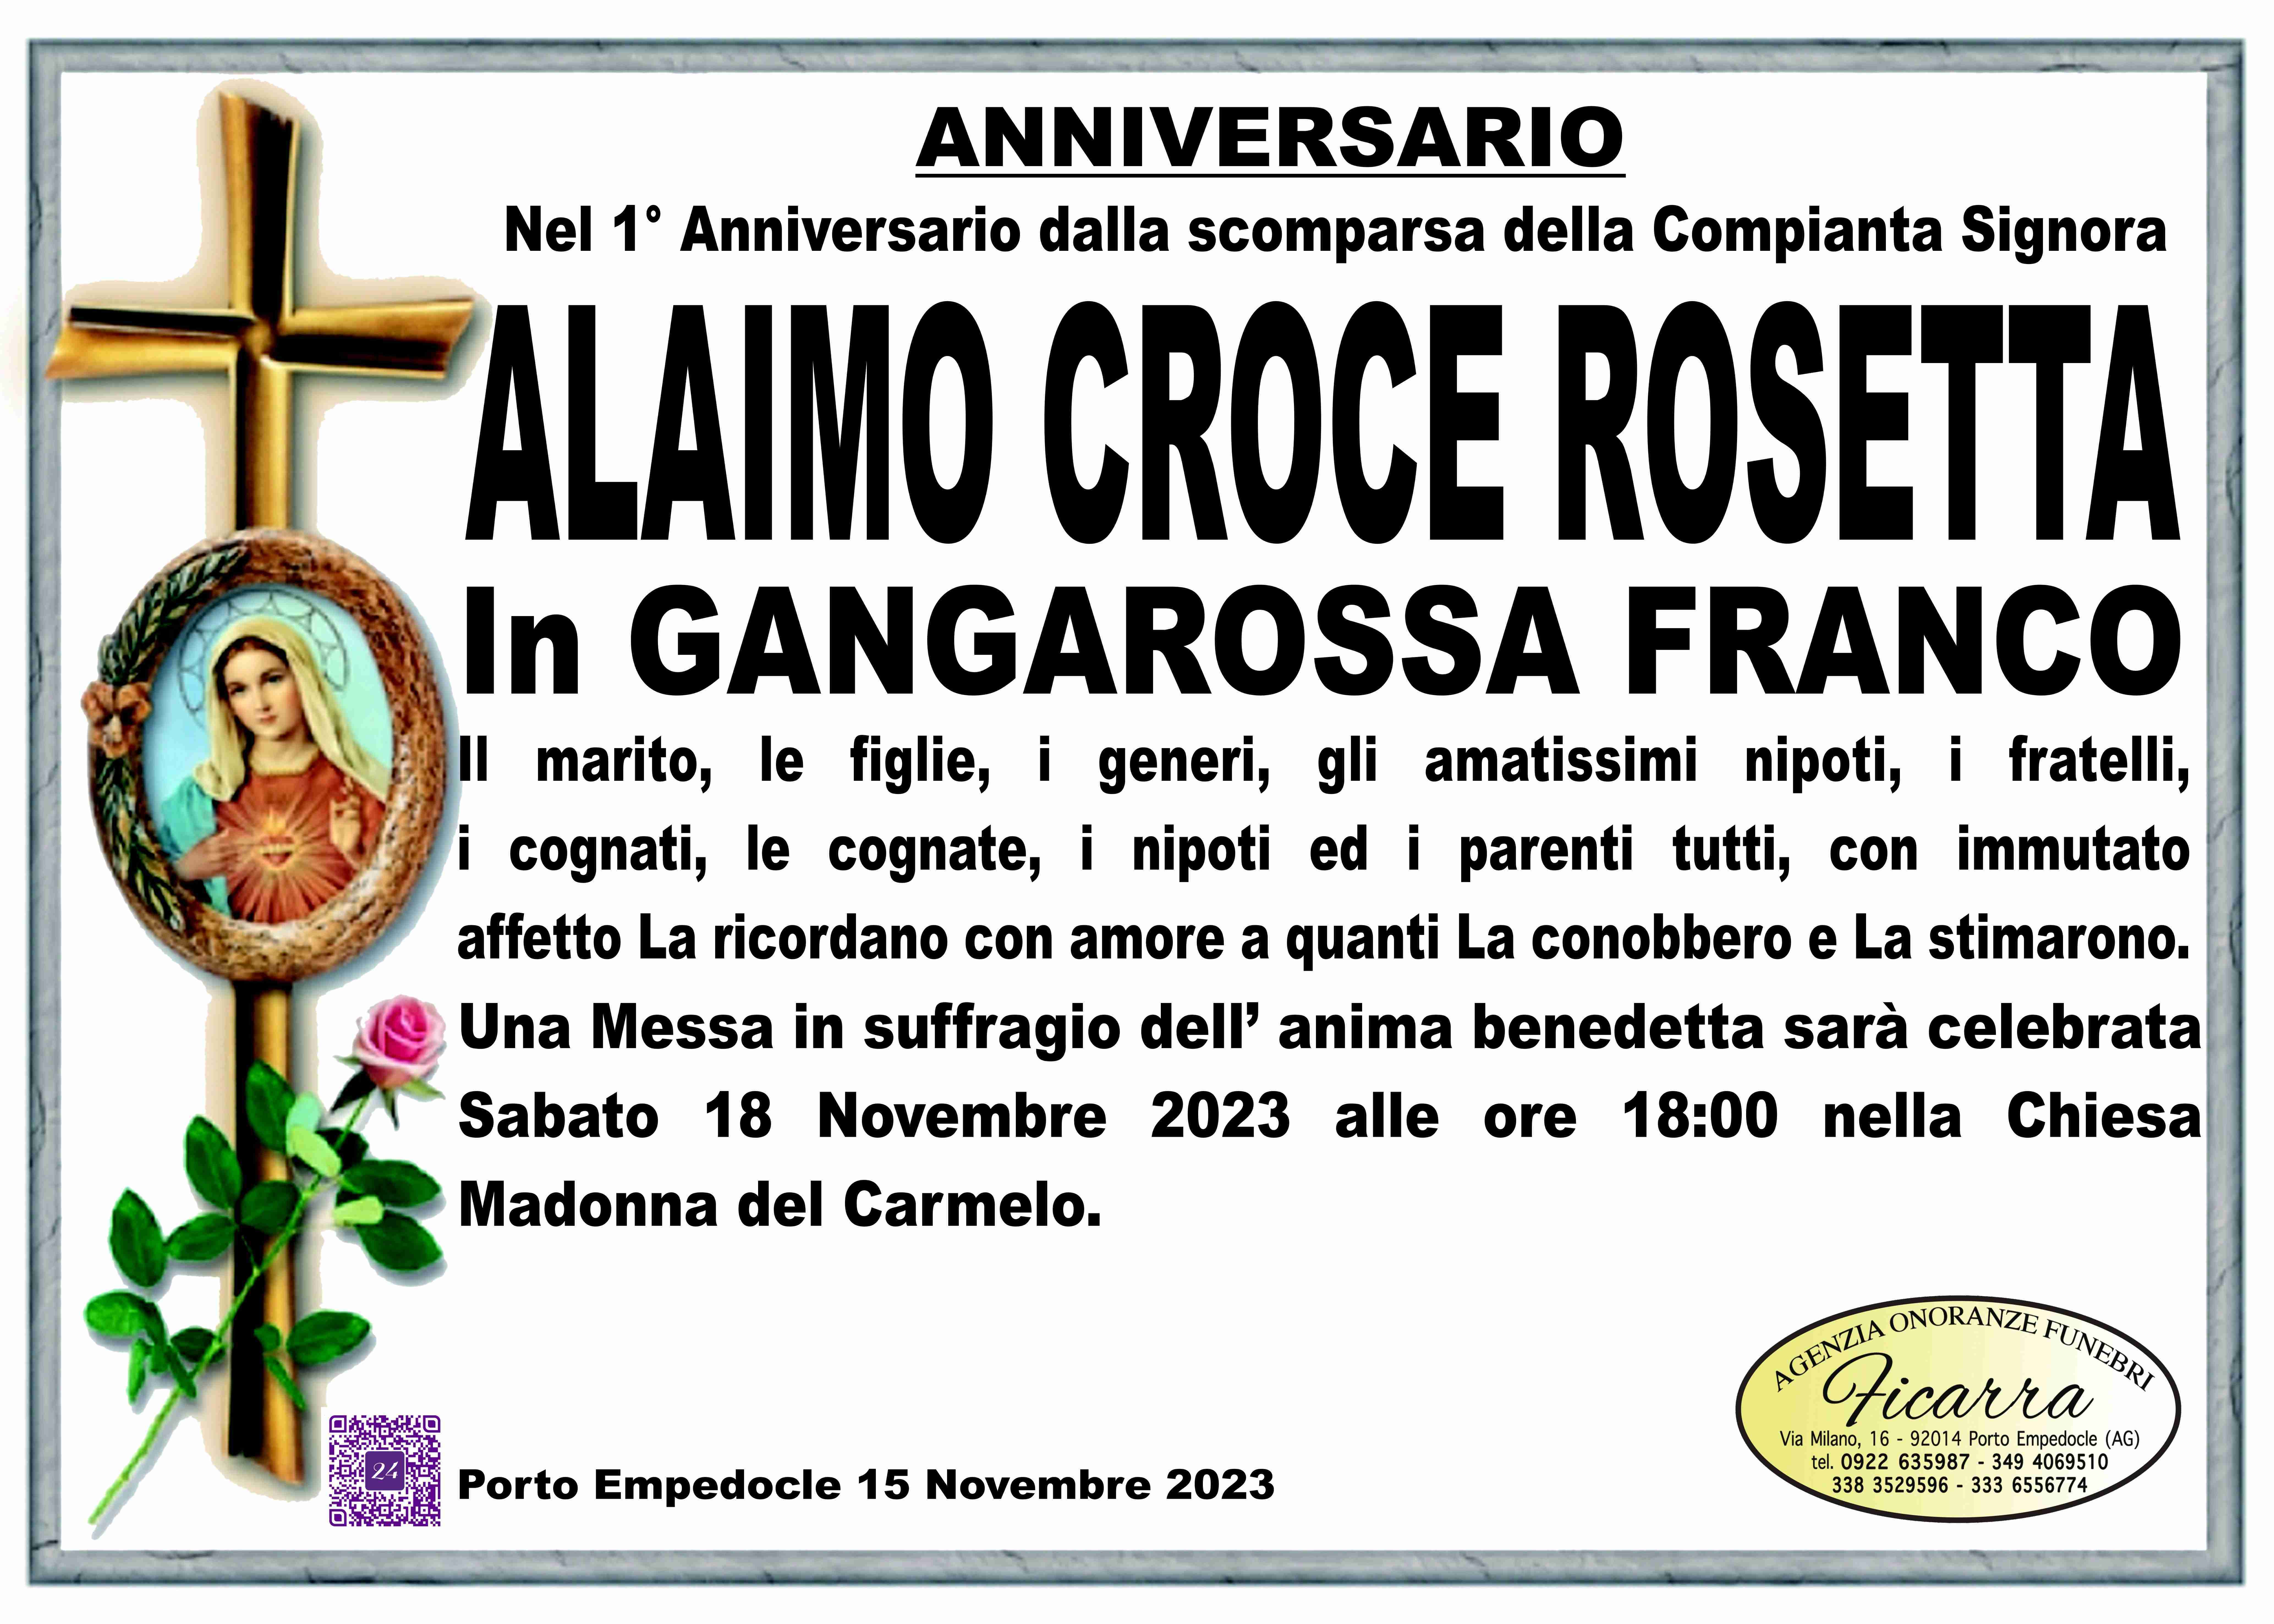 Croce Rosetta Alaimo